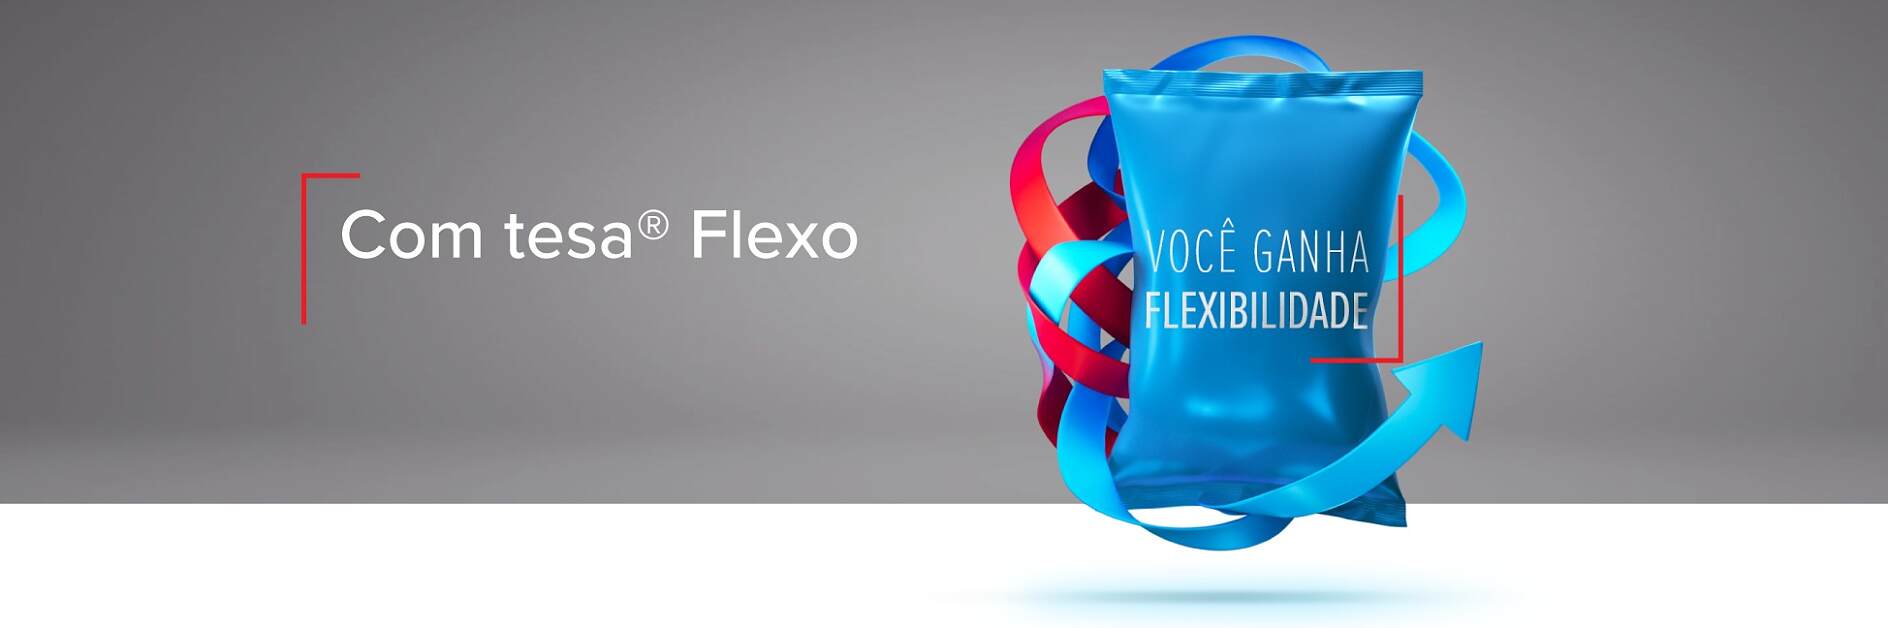 Web-banners2 - flexo